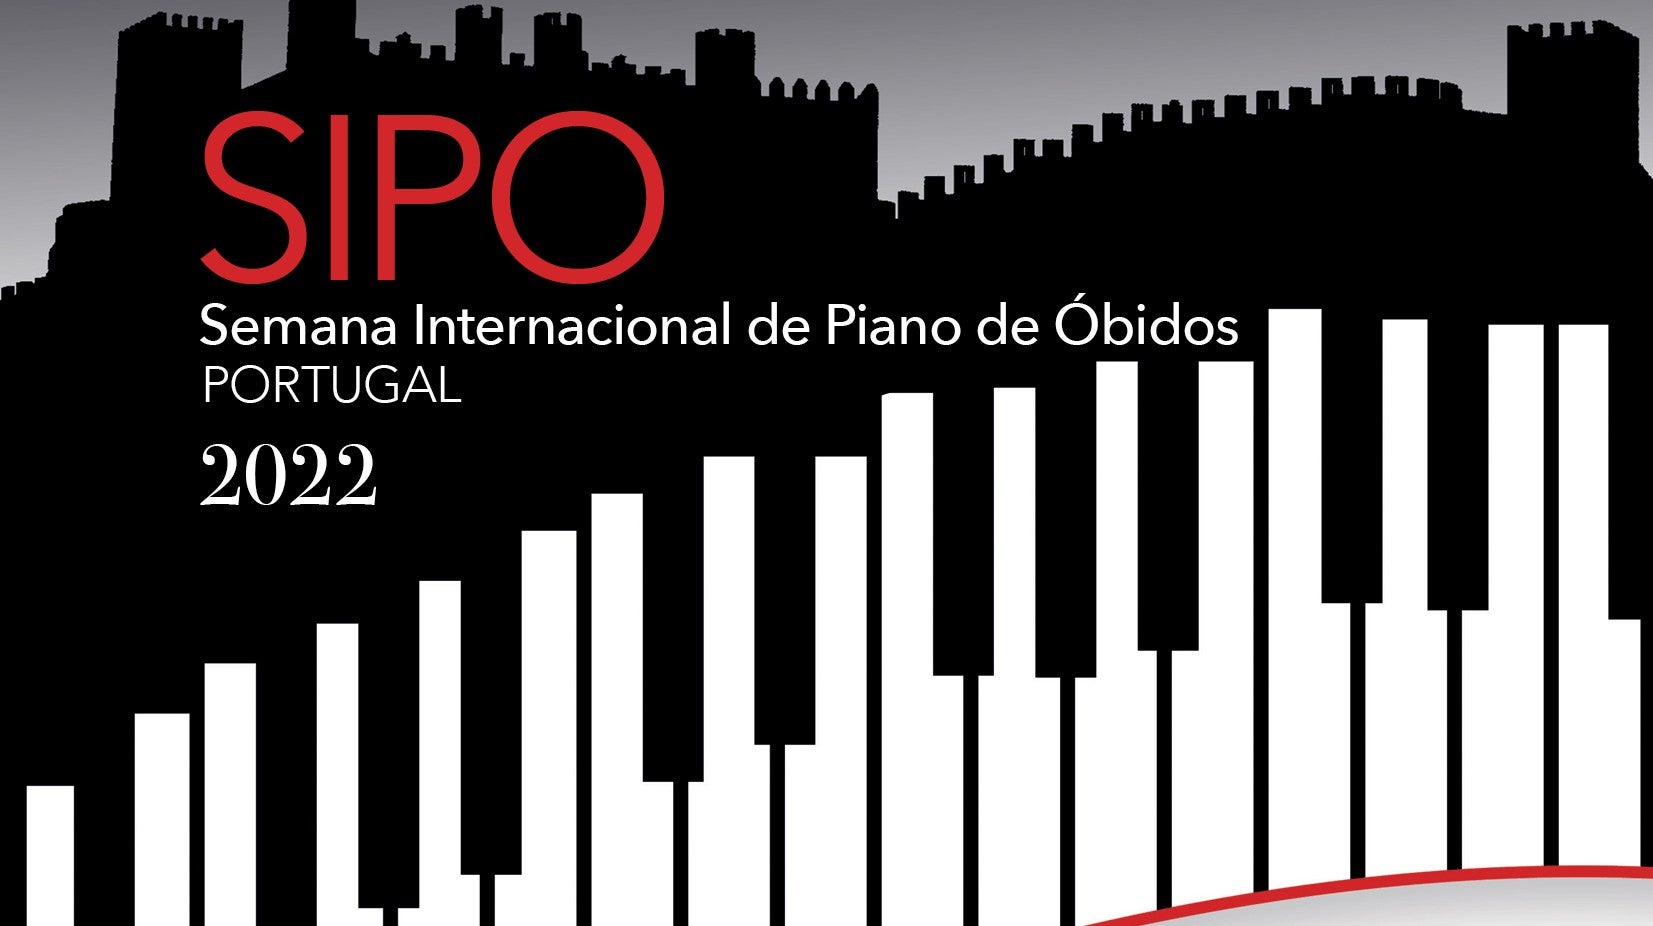 Semana Internacional de Piano de bidos